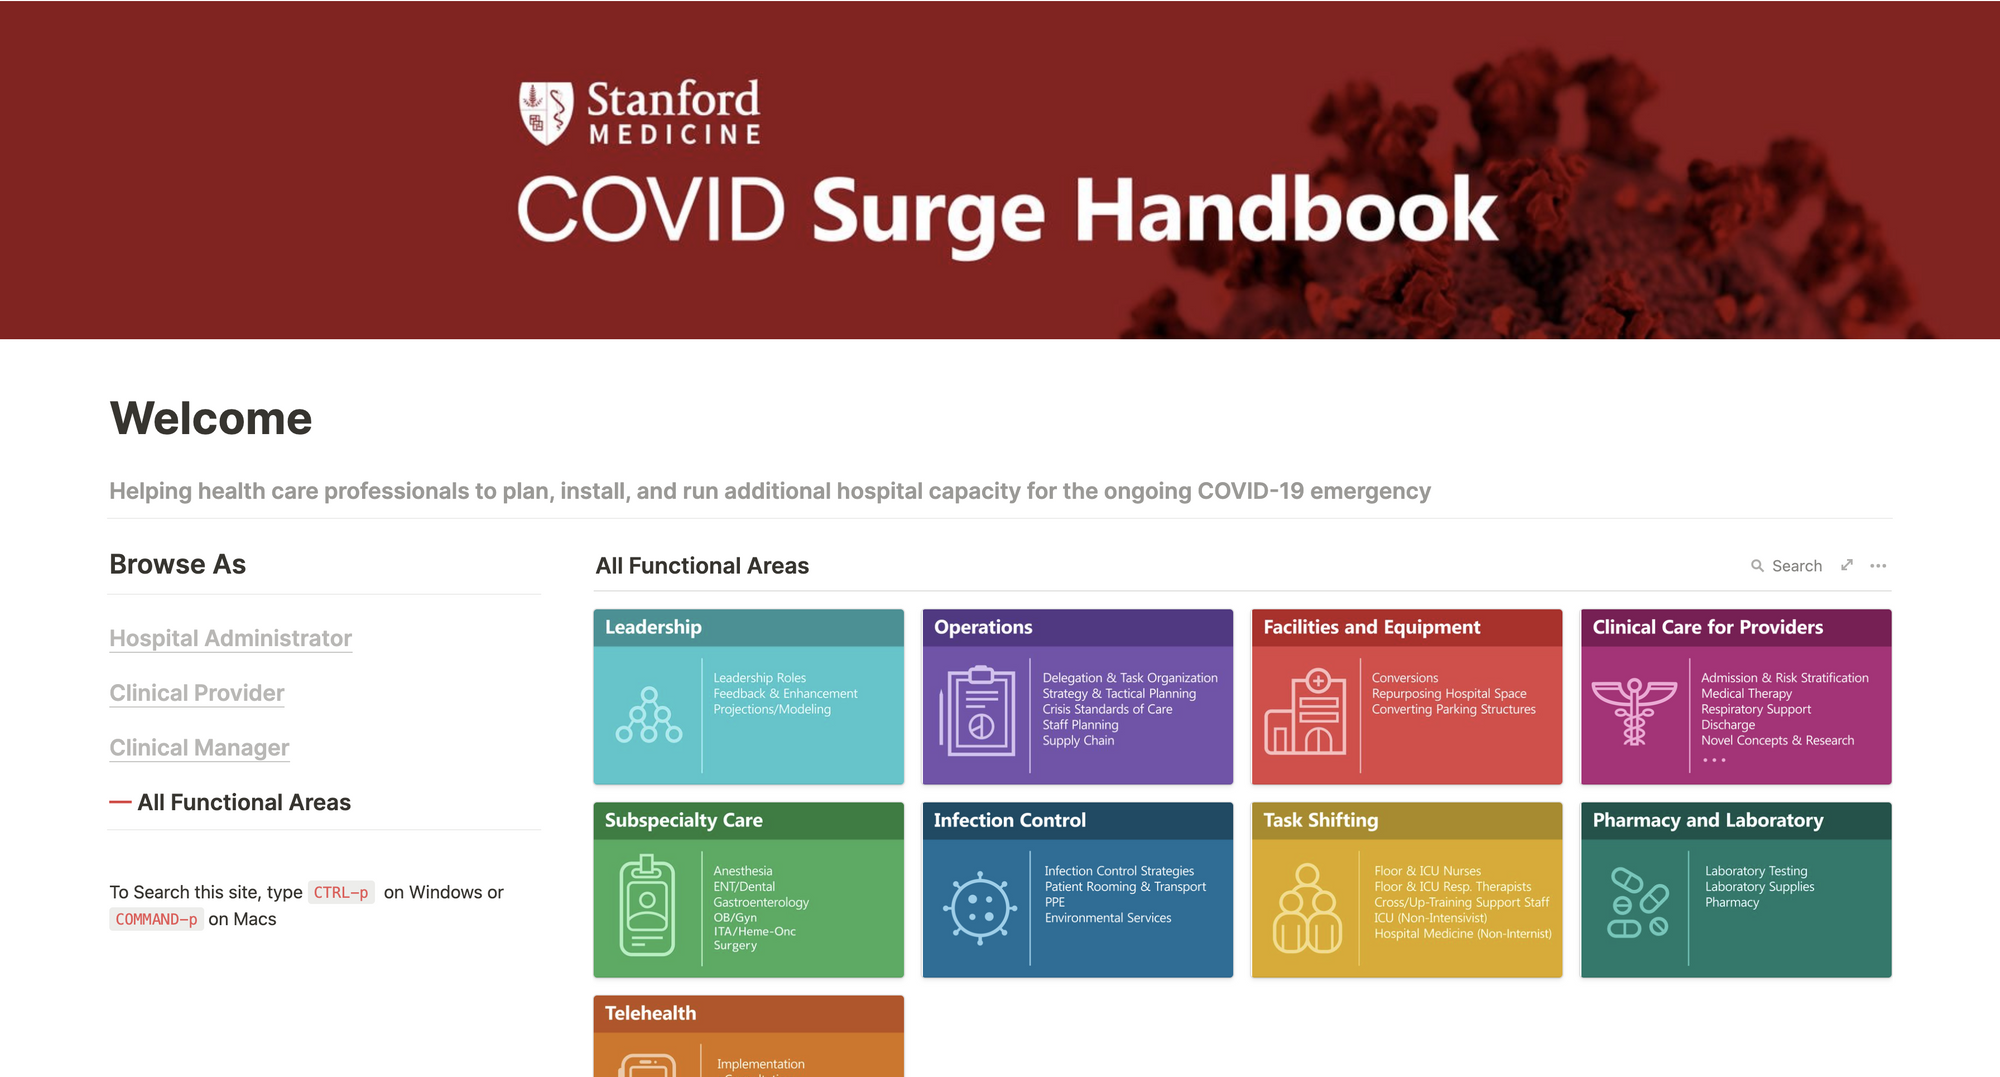 Stanford's COVID Surge Handbook